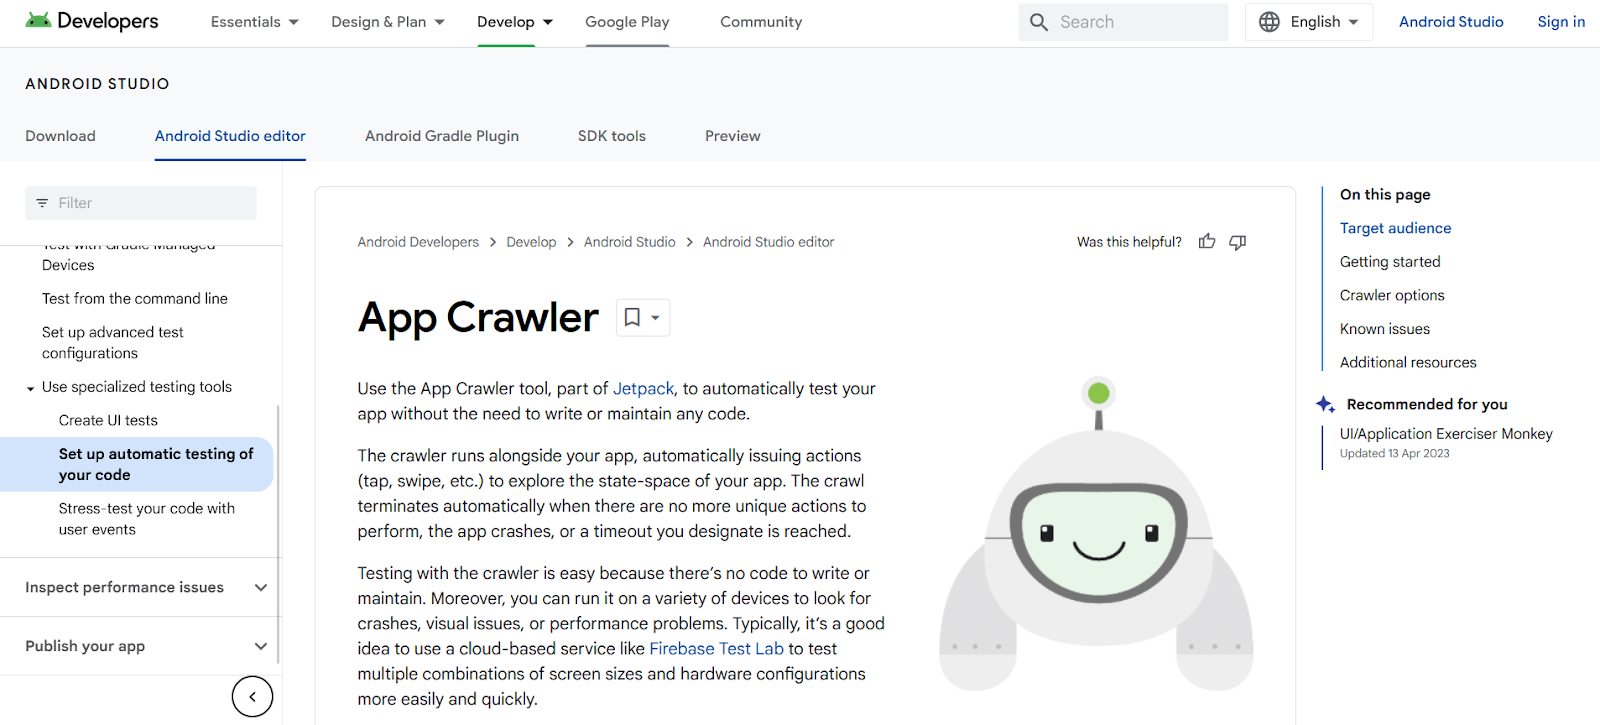 App Crawler